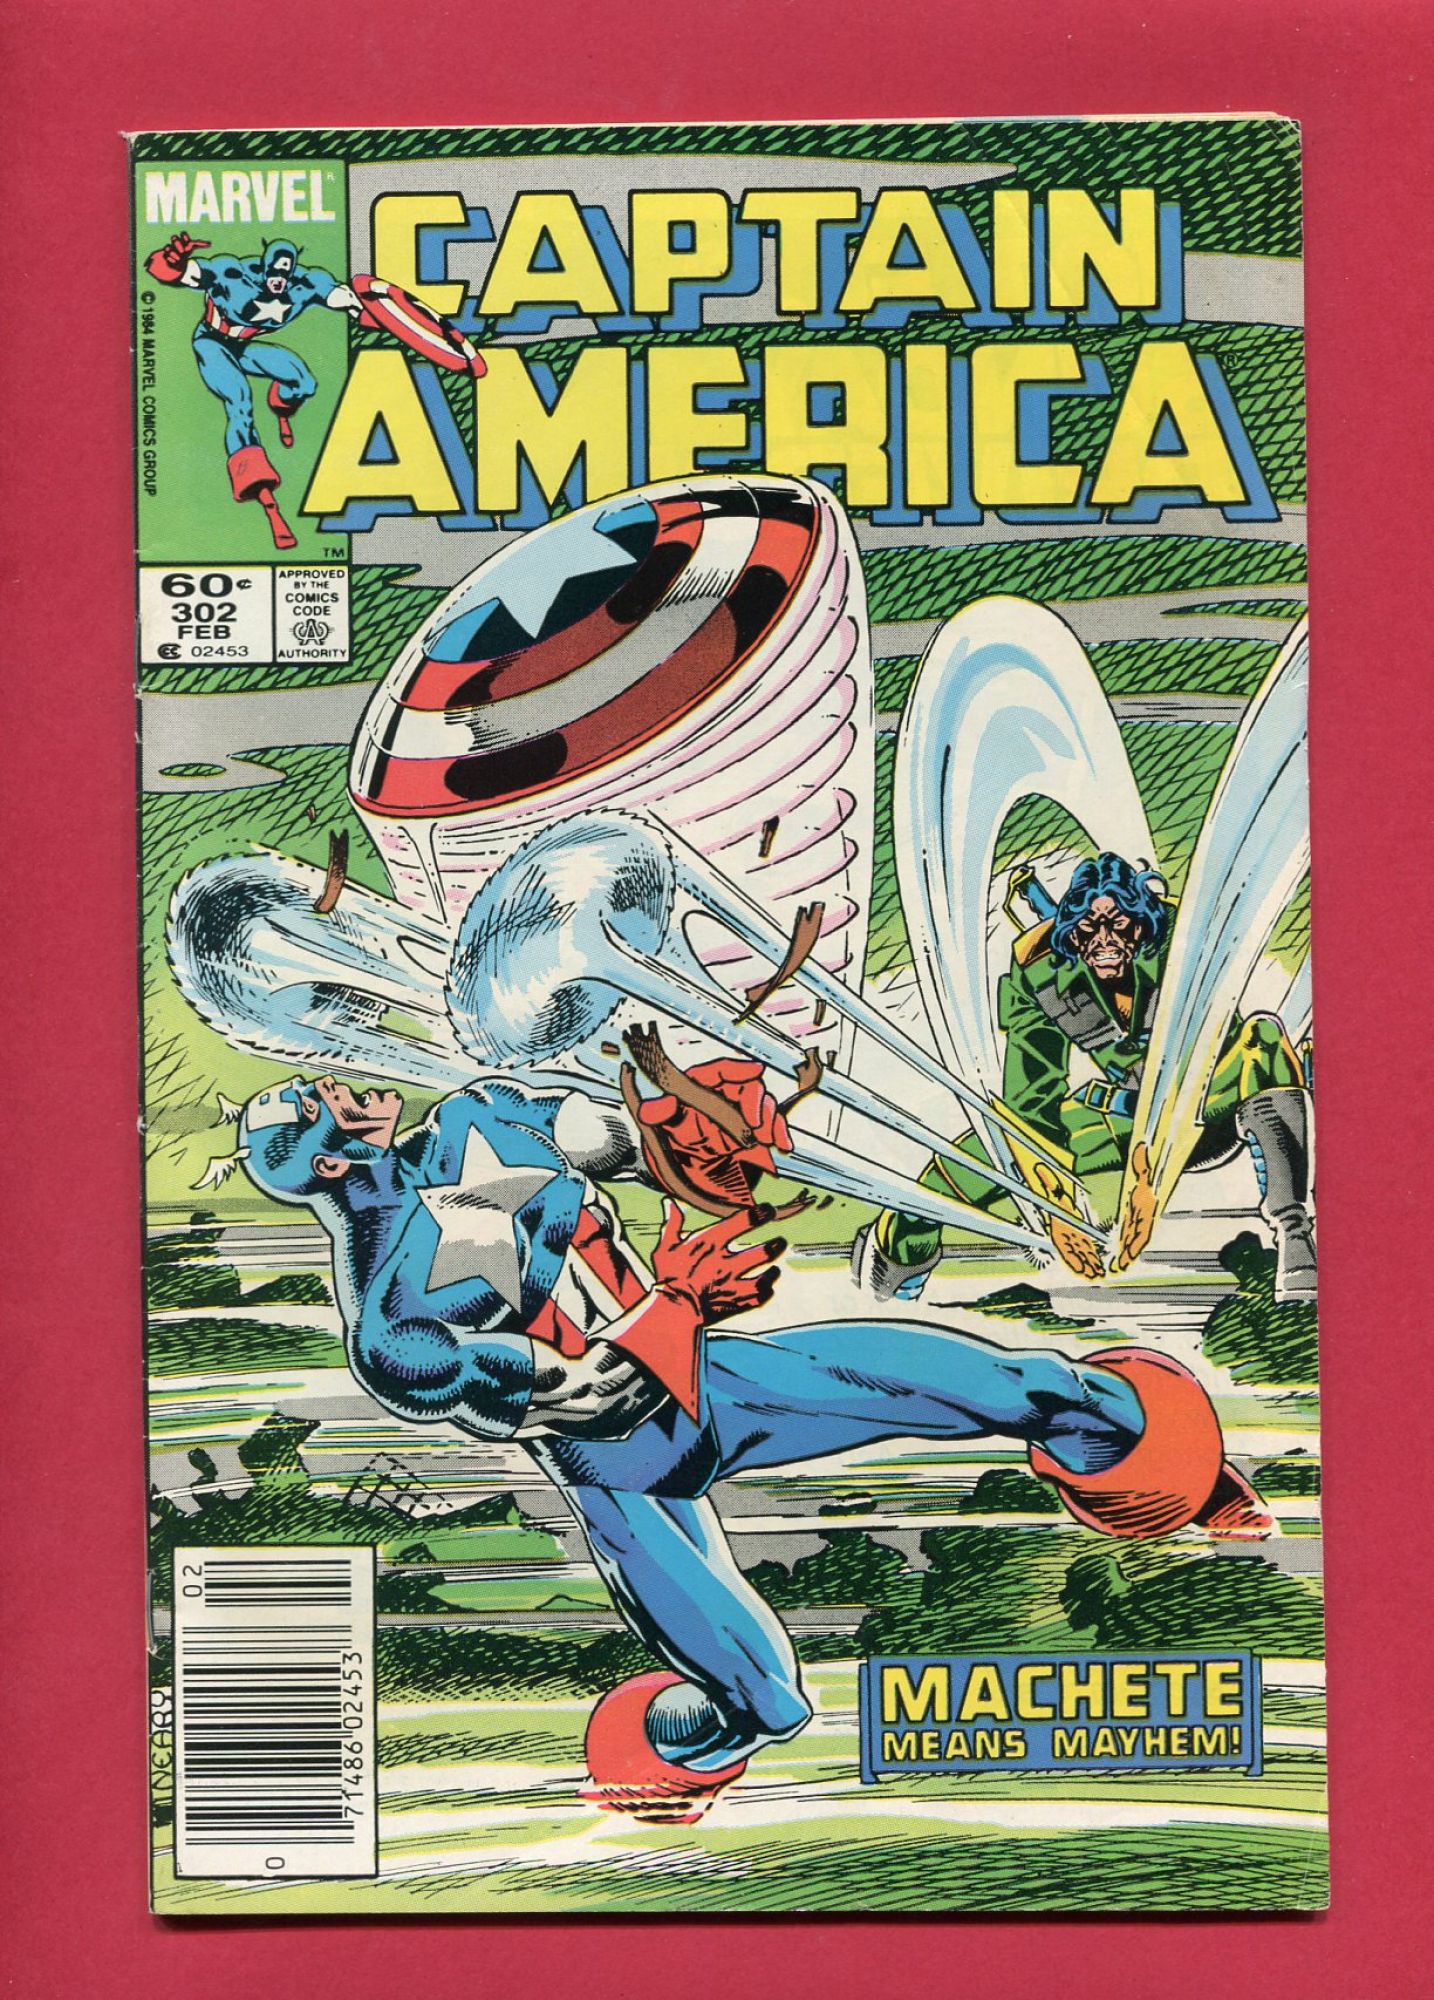 Captain America #302, Feb 1985, 6.5 FN+